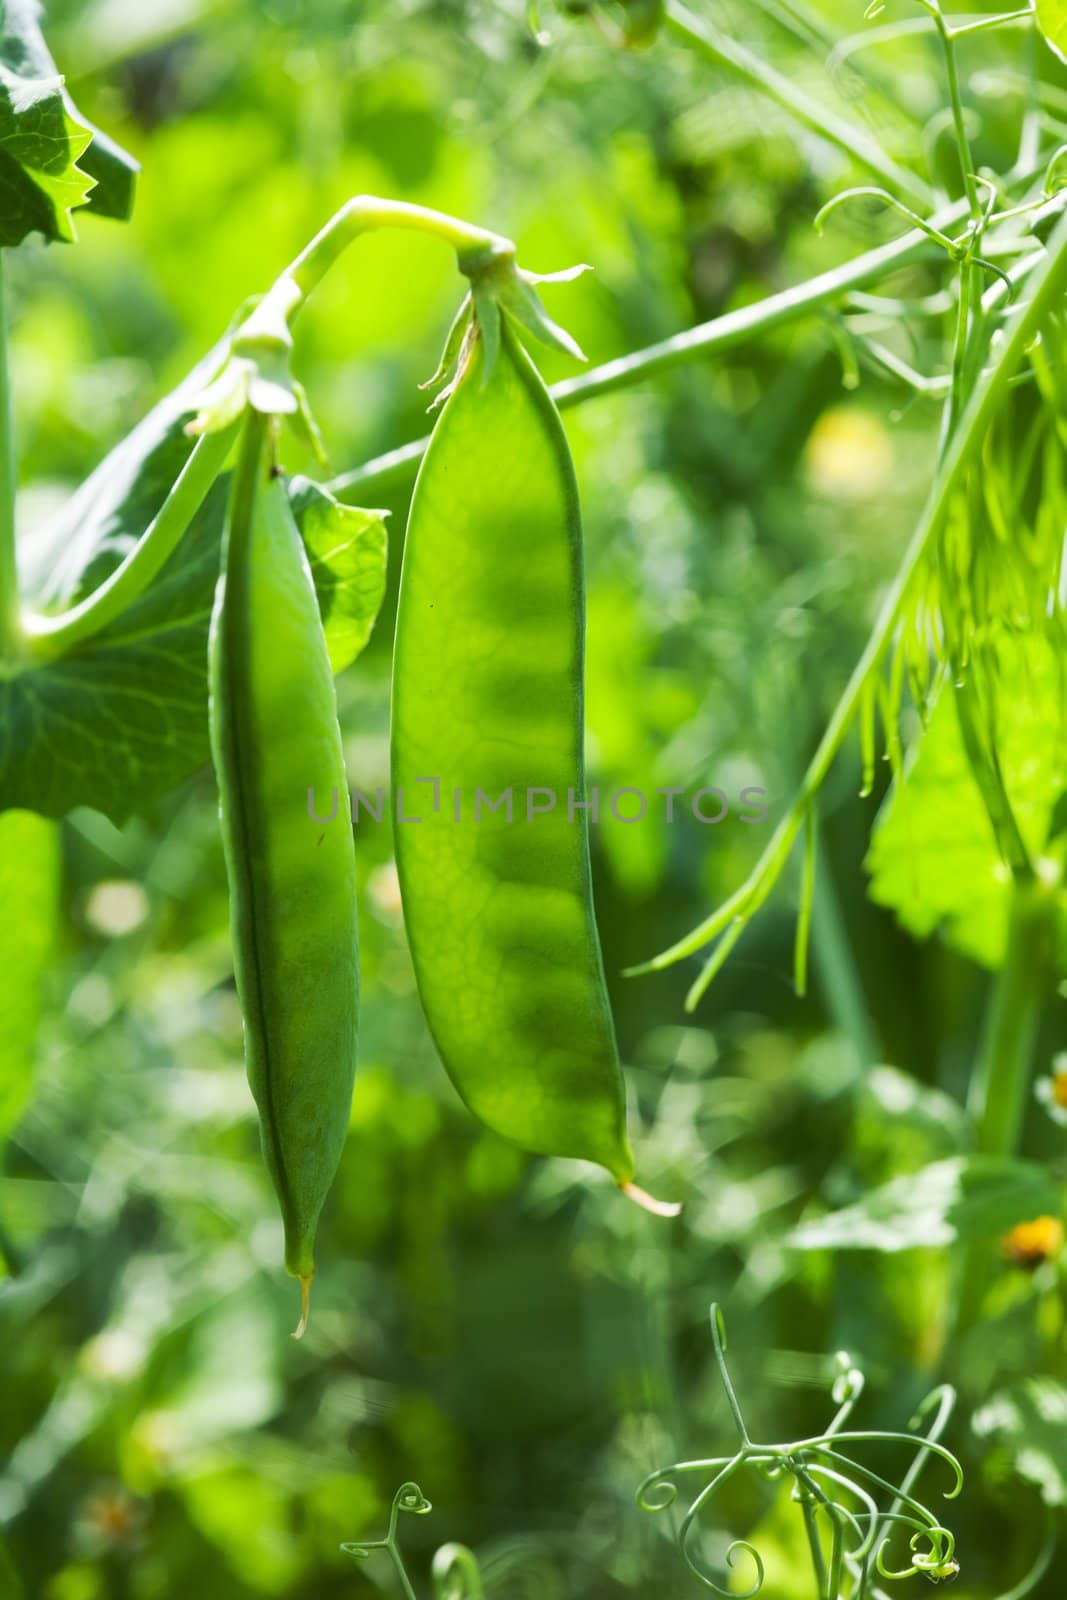 An image of a pod of fresh green bean